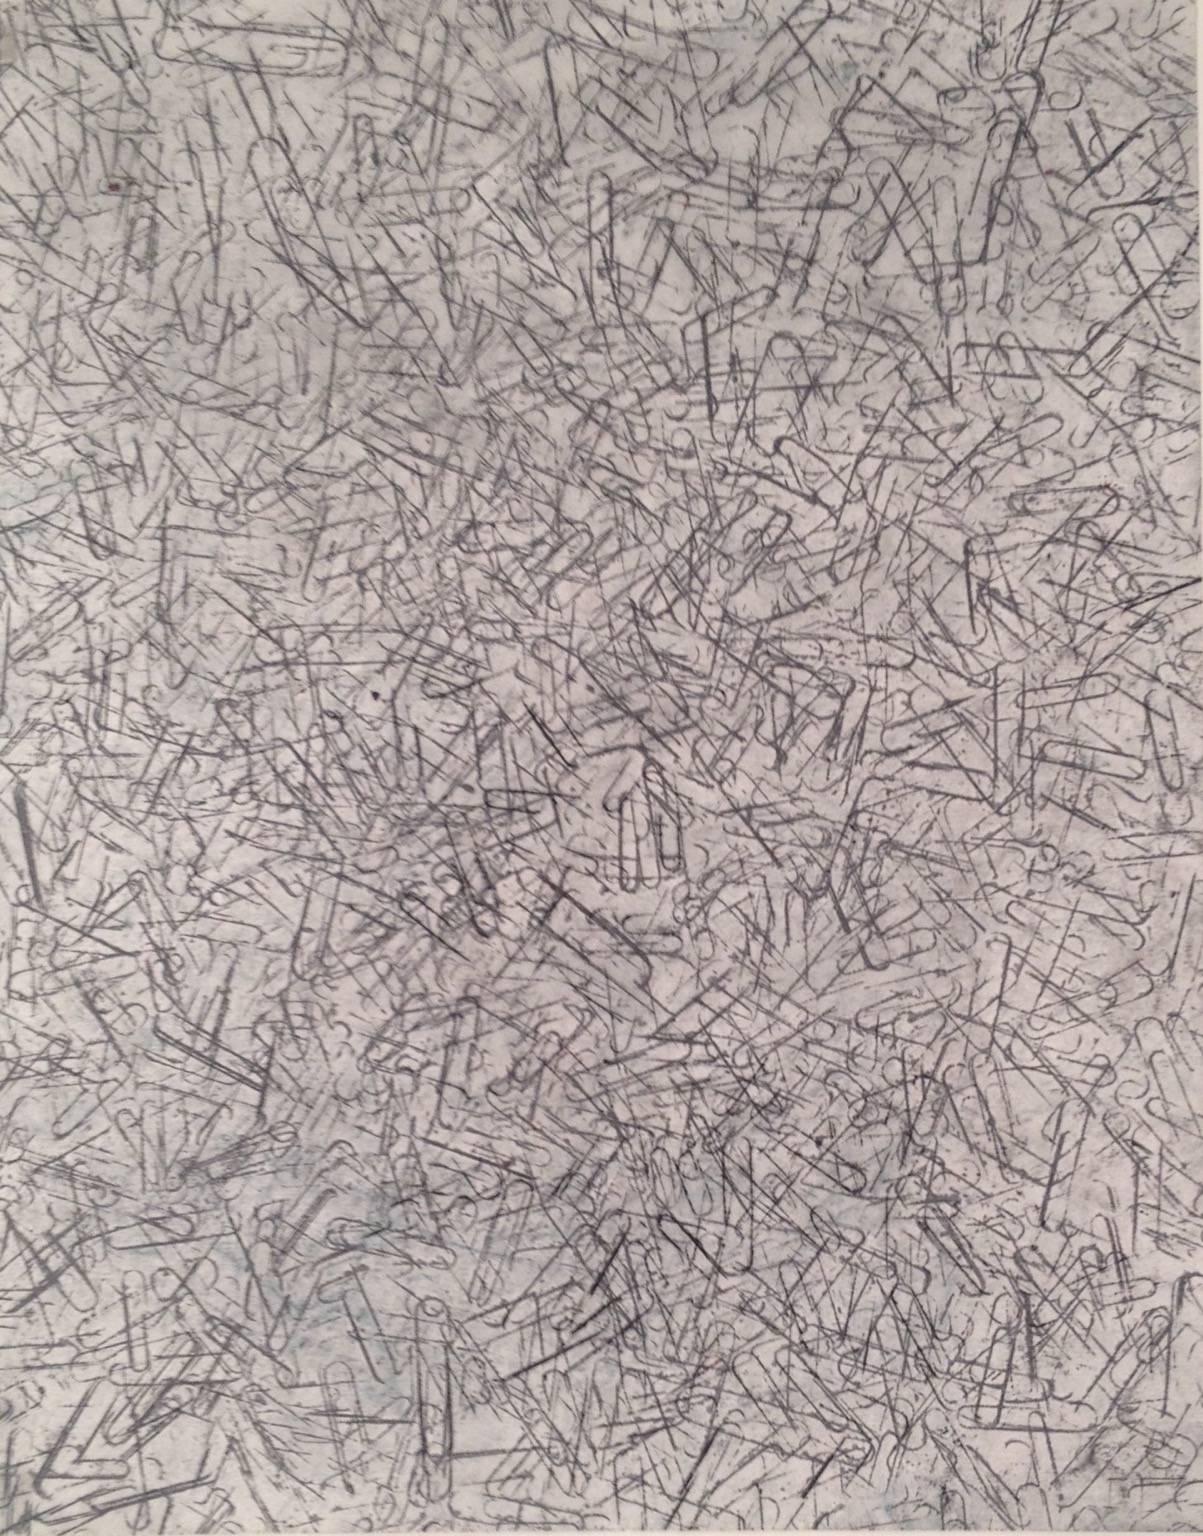 Tamiko Kawata Still-Life - Clips - 4 Black, realist black and white conte crayon rubbing, patterned design